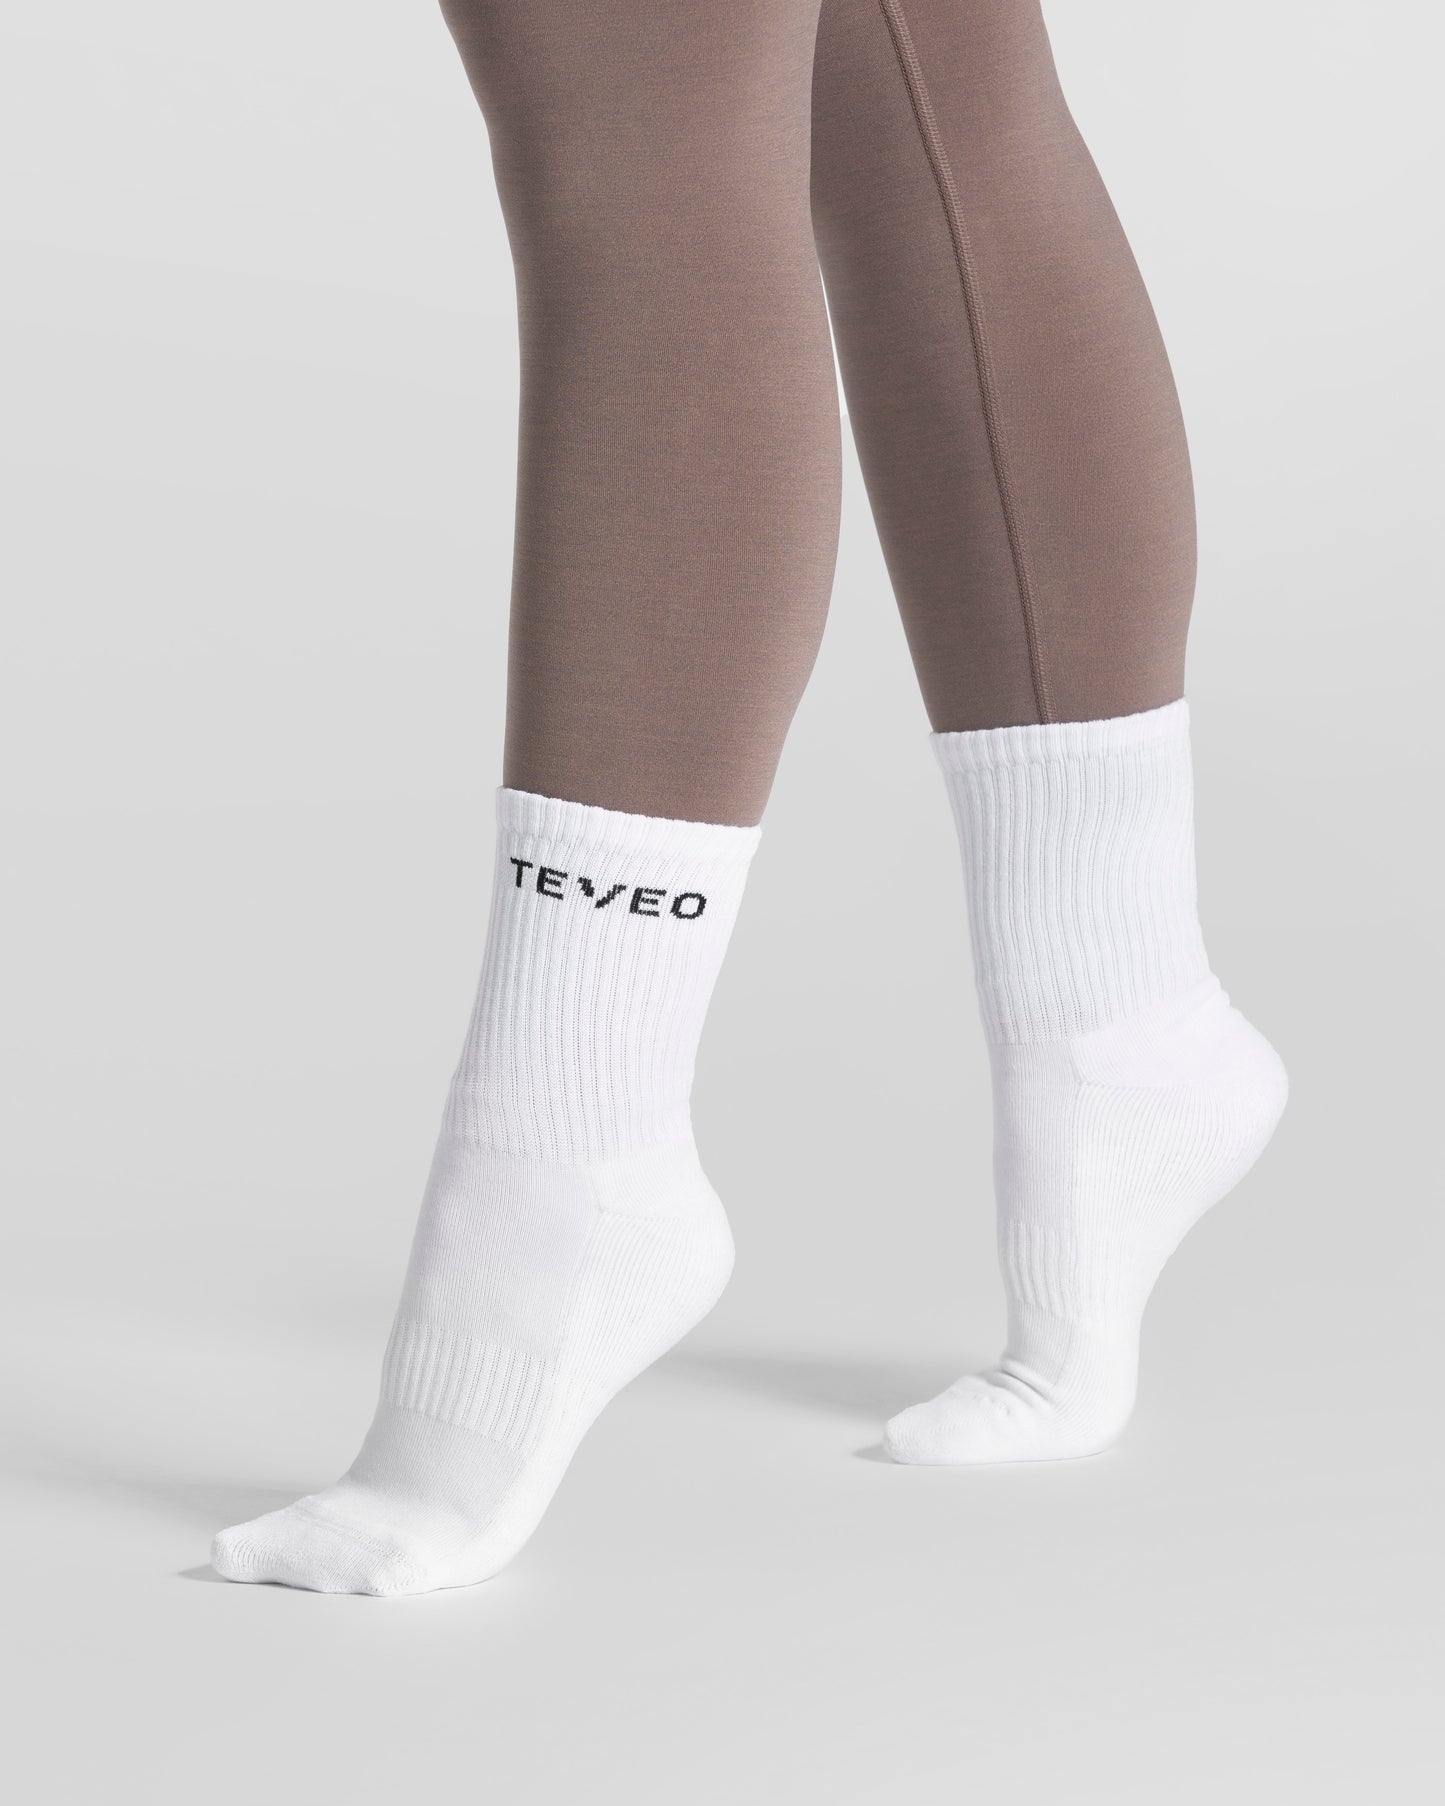 Teveo Tennis Socken (2er) "Weiß"